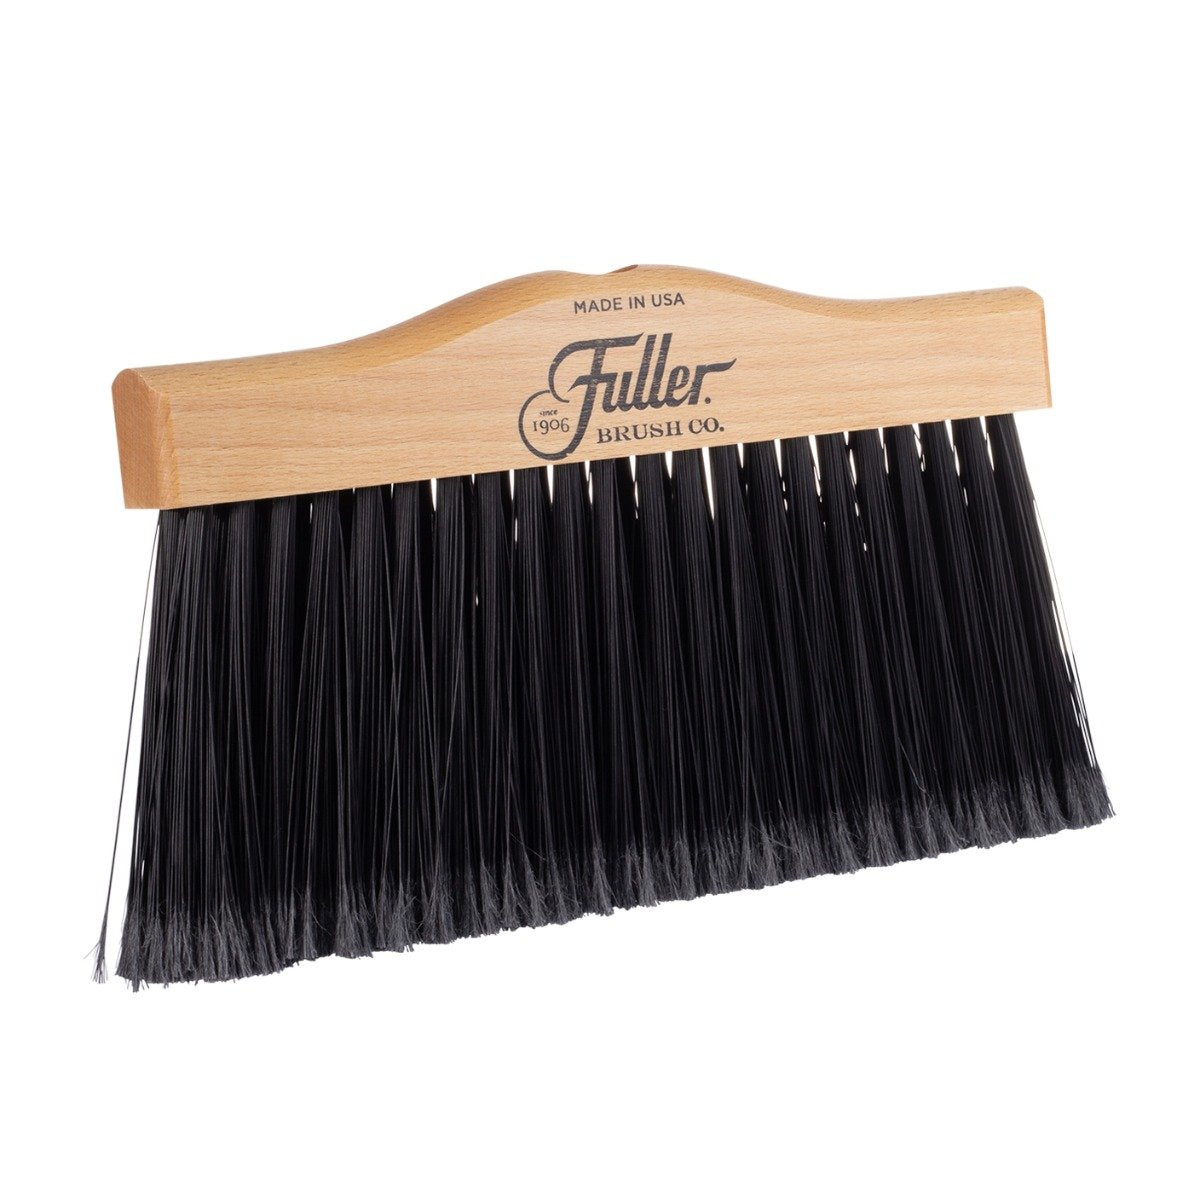 History — Fuller Brush Company